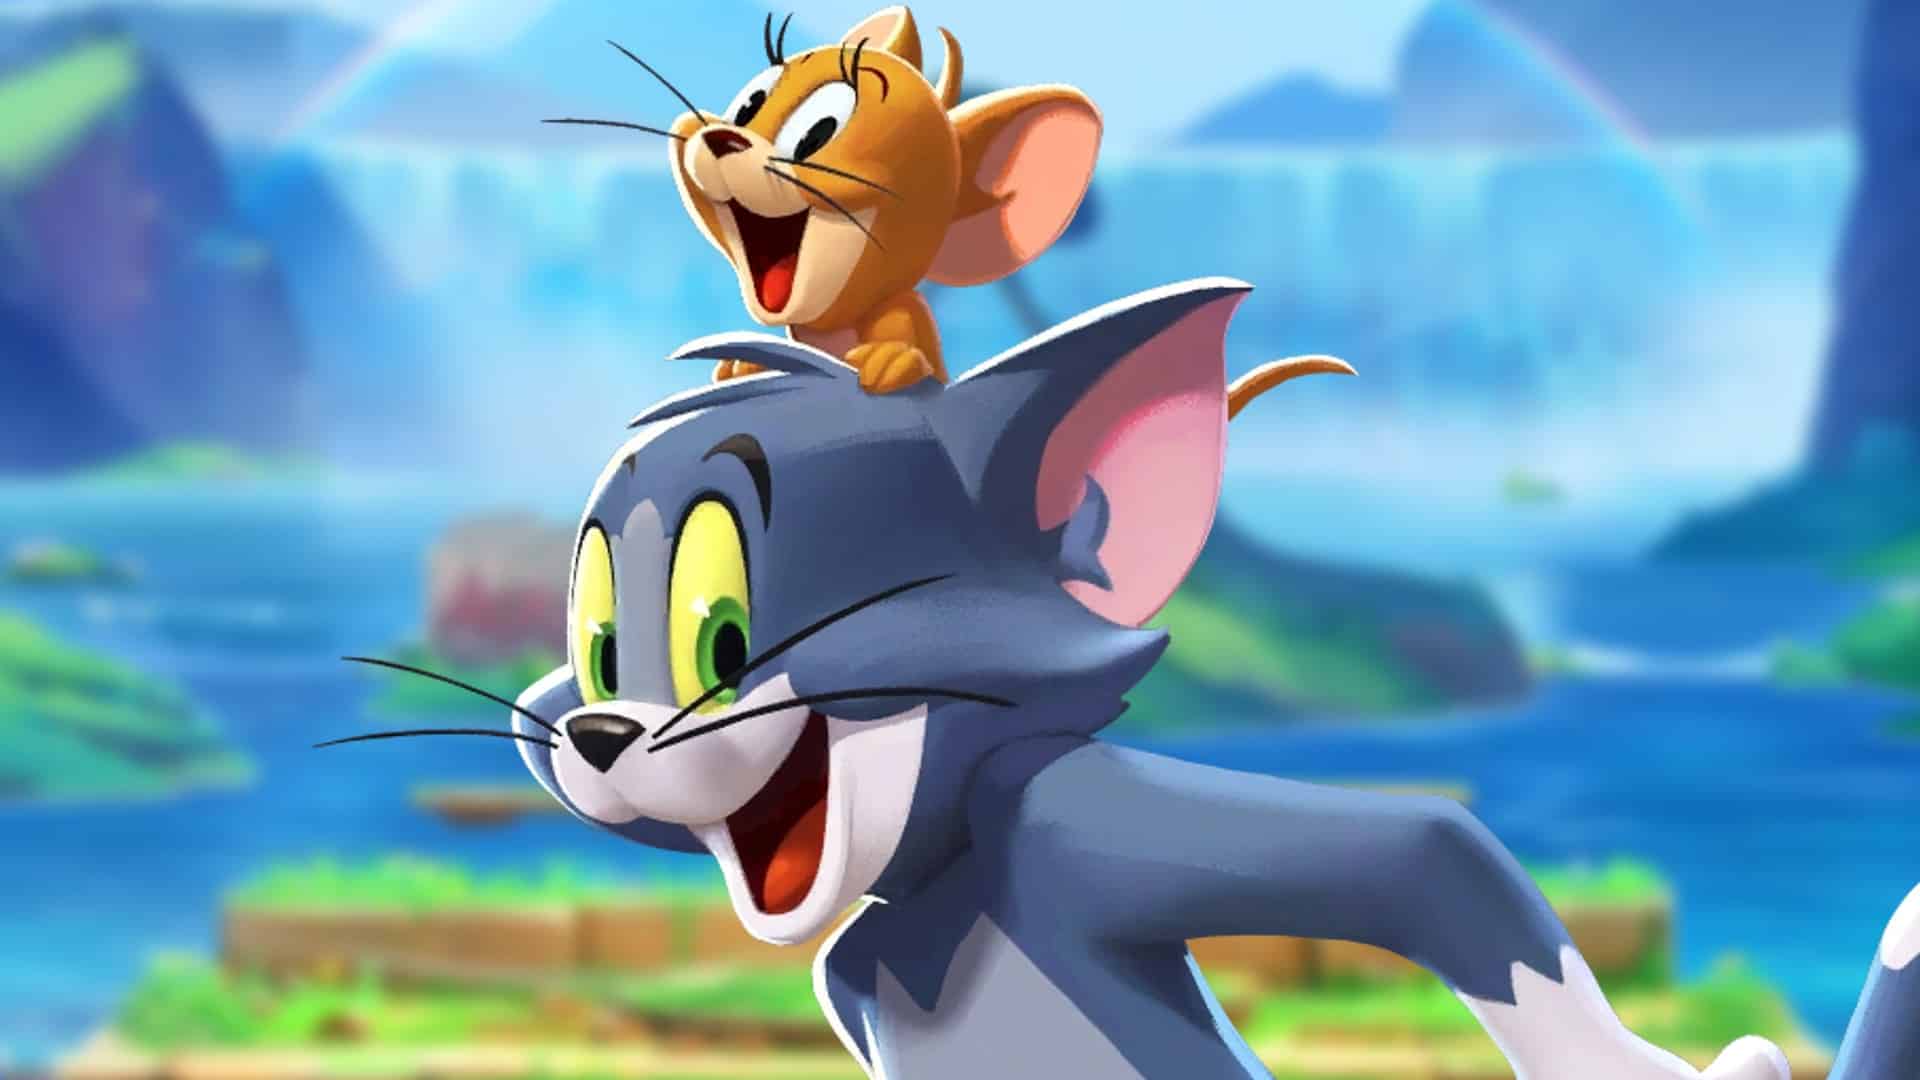 Tom & Jerry em Português, Brasil